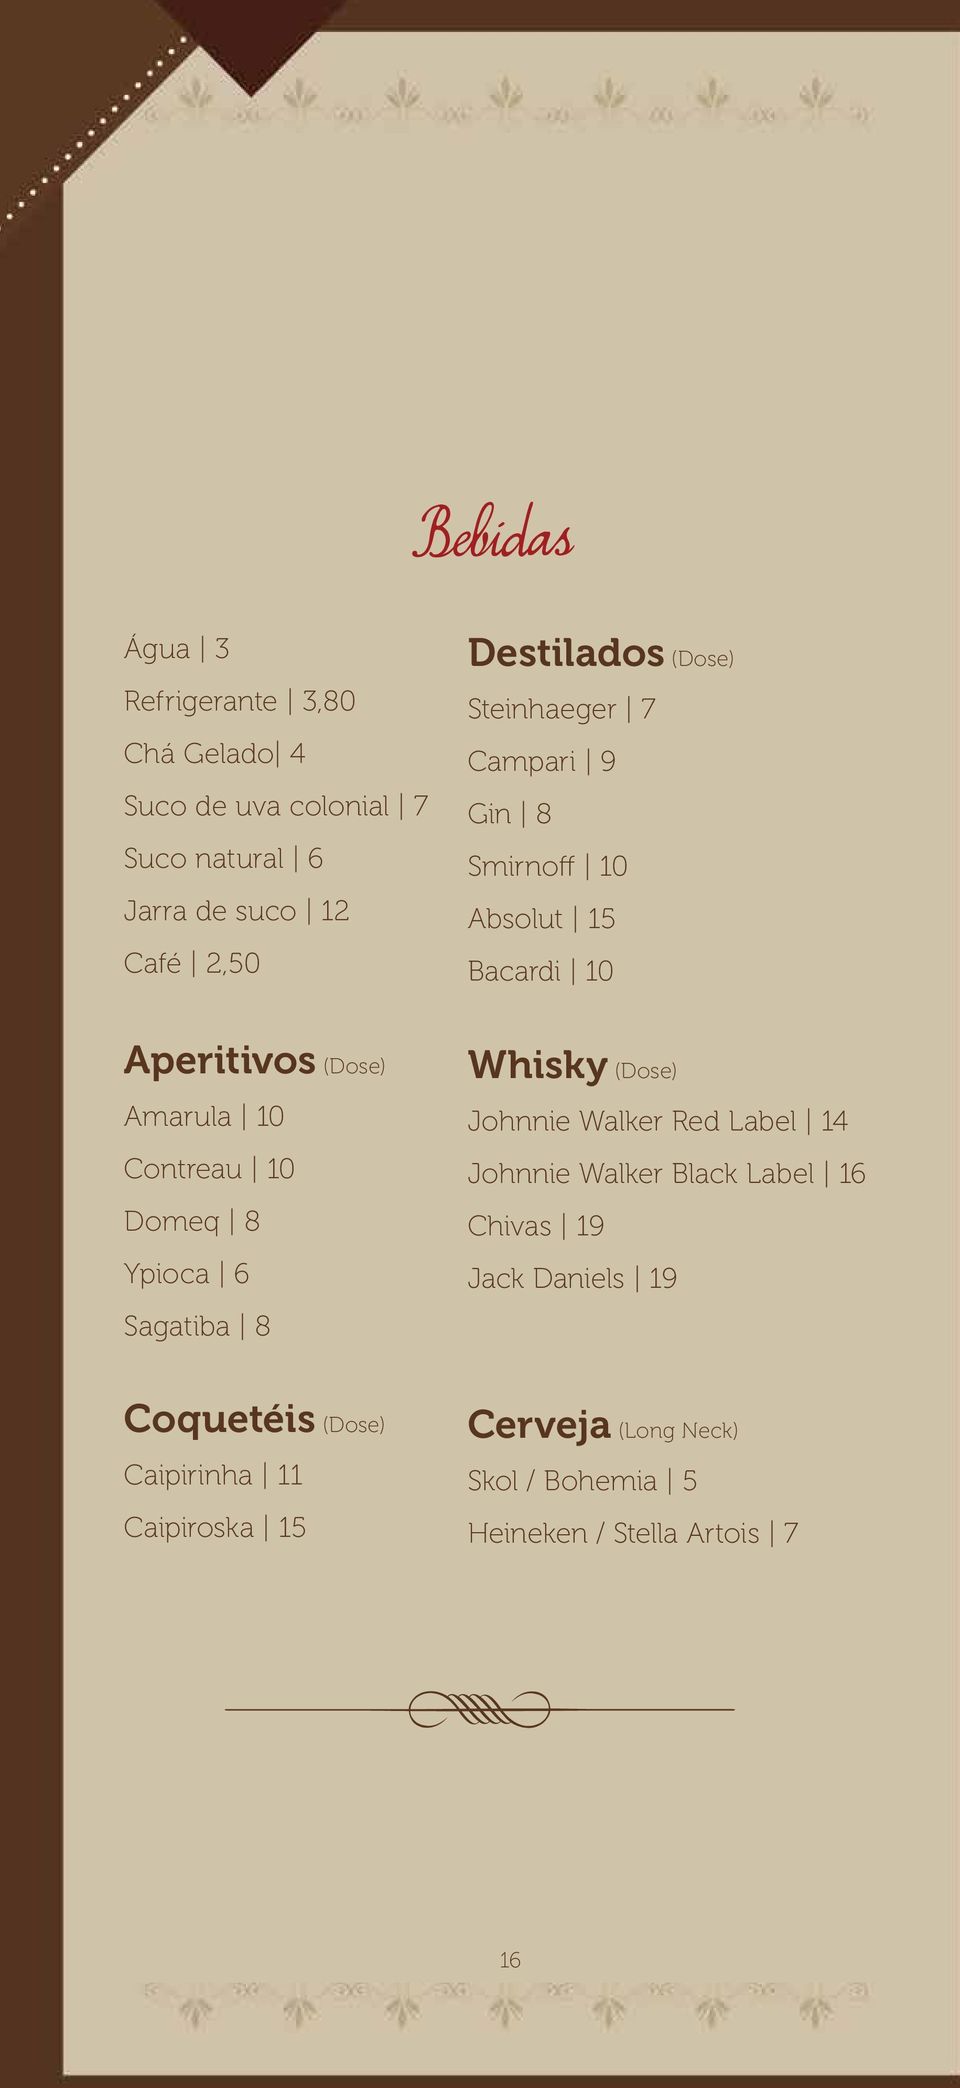 Contreau 10 Domeq 8 Ypioca 6 Sagatiba 8 Whisky (Dose) Johnnie Walker Red Label 14 Johnnie Walker Black Label 16